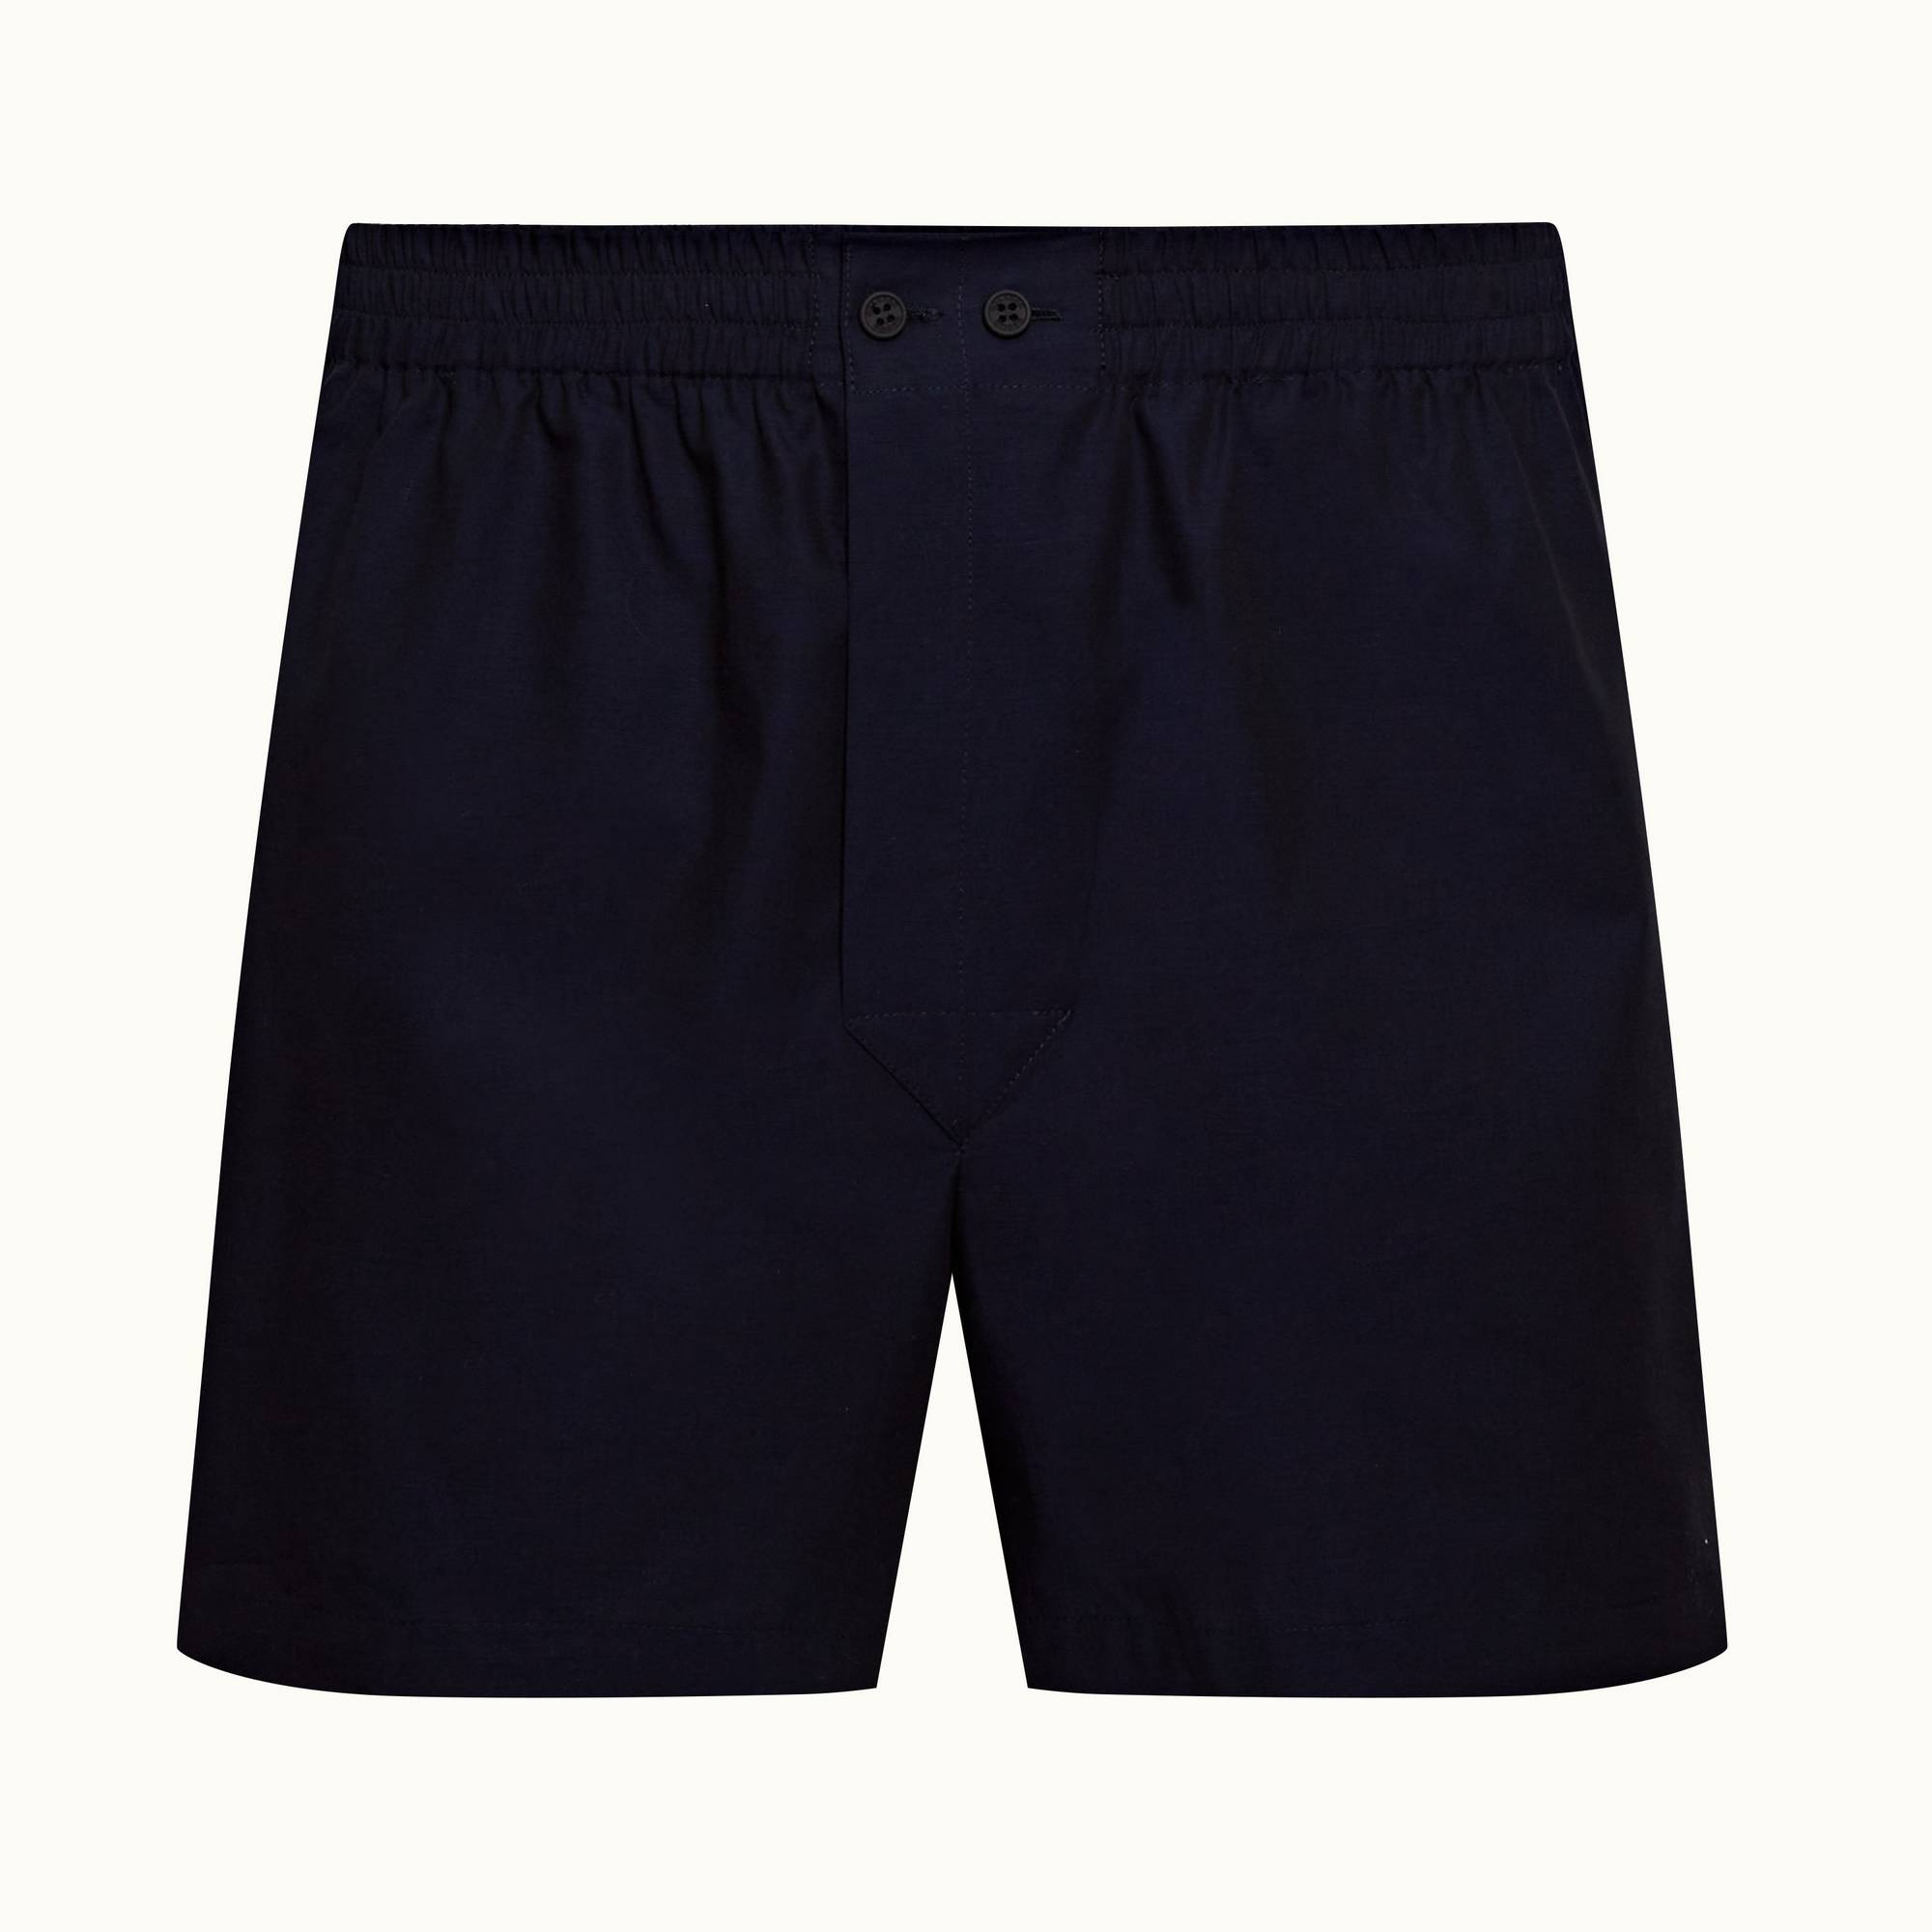 Boxer Short - Mens Navy Cotton Boxer Shorts